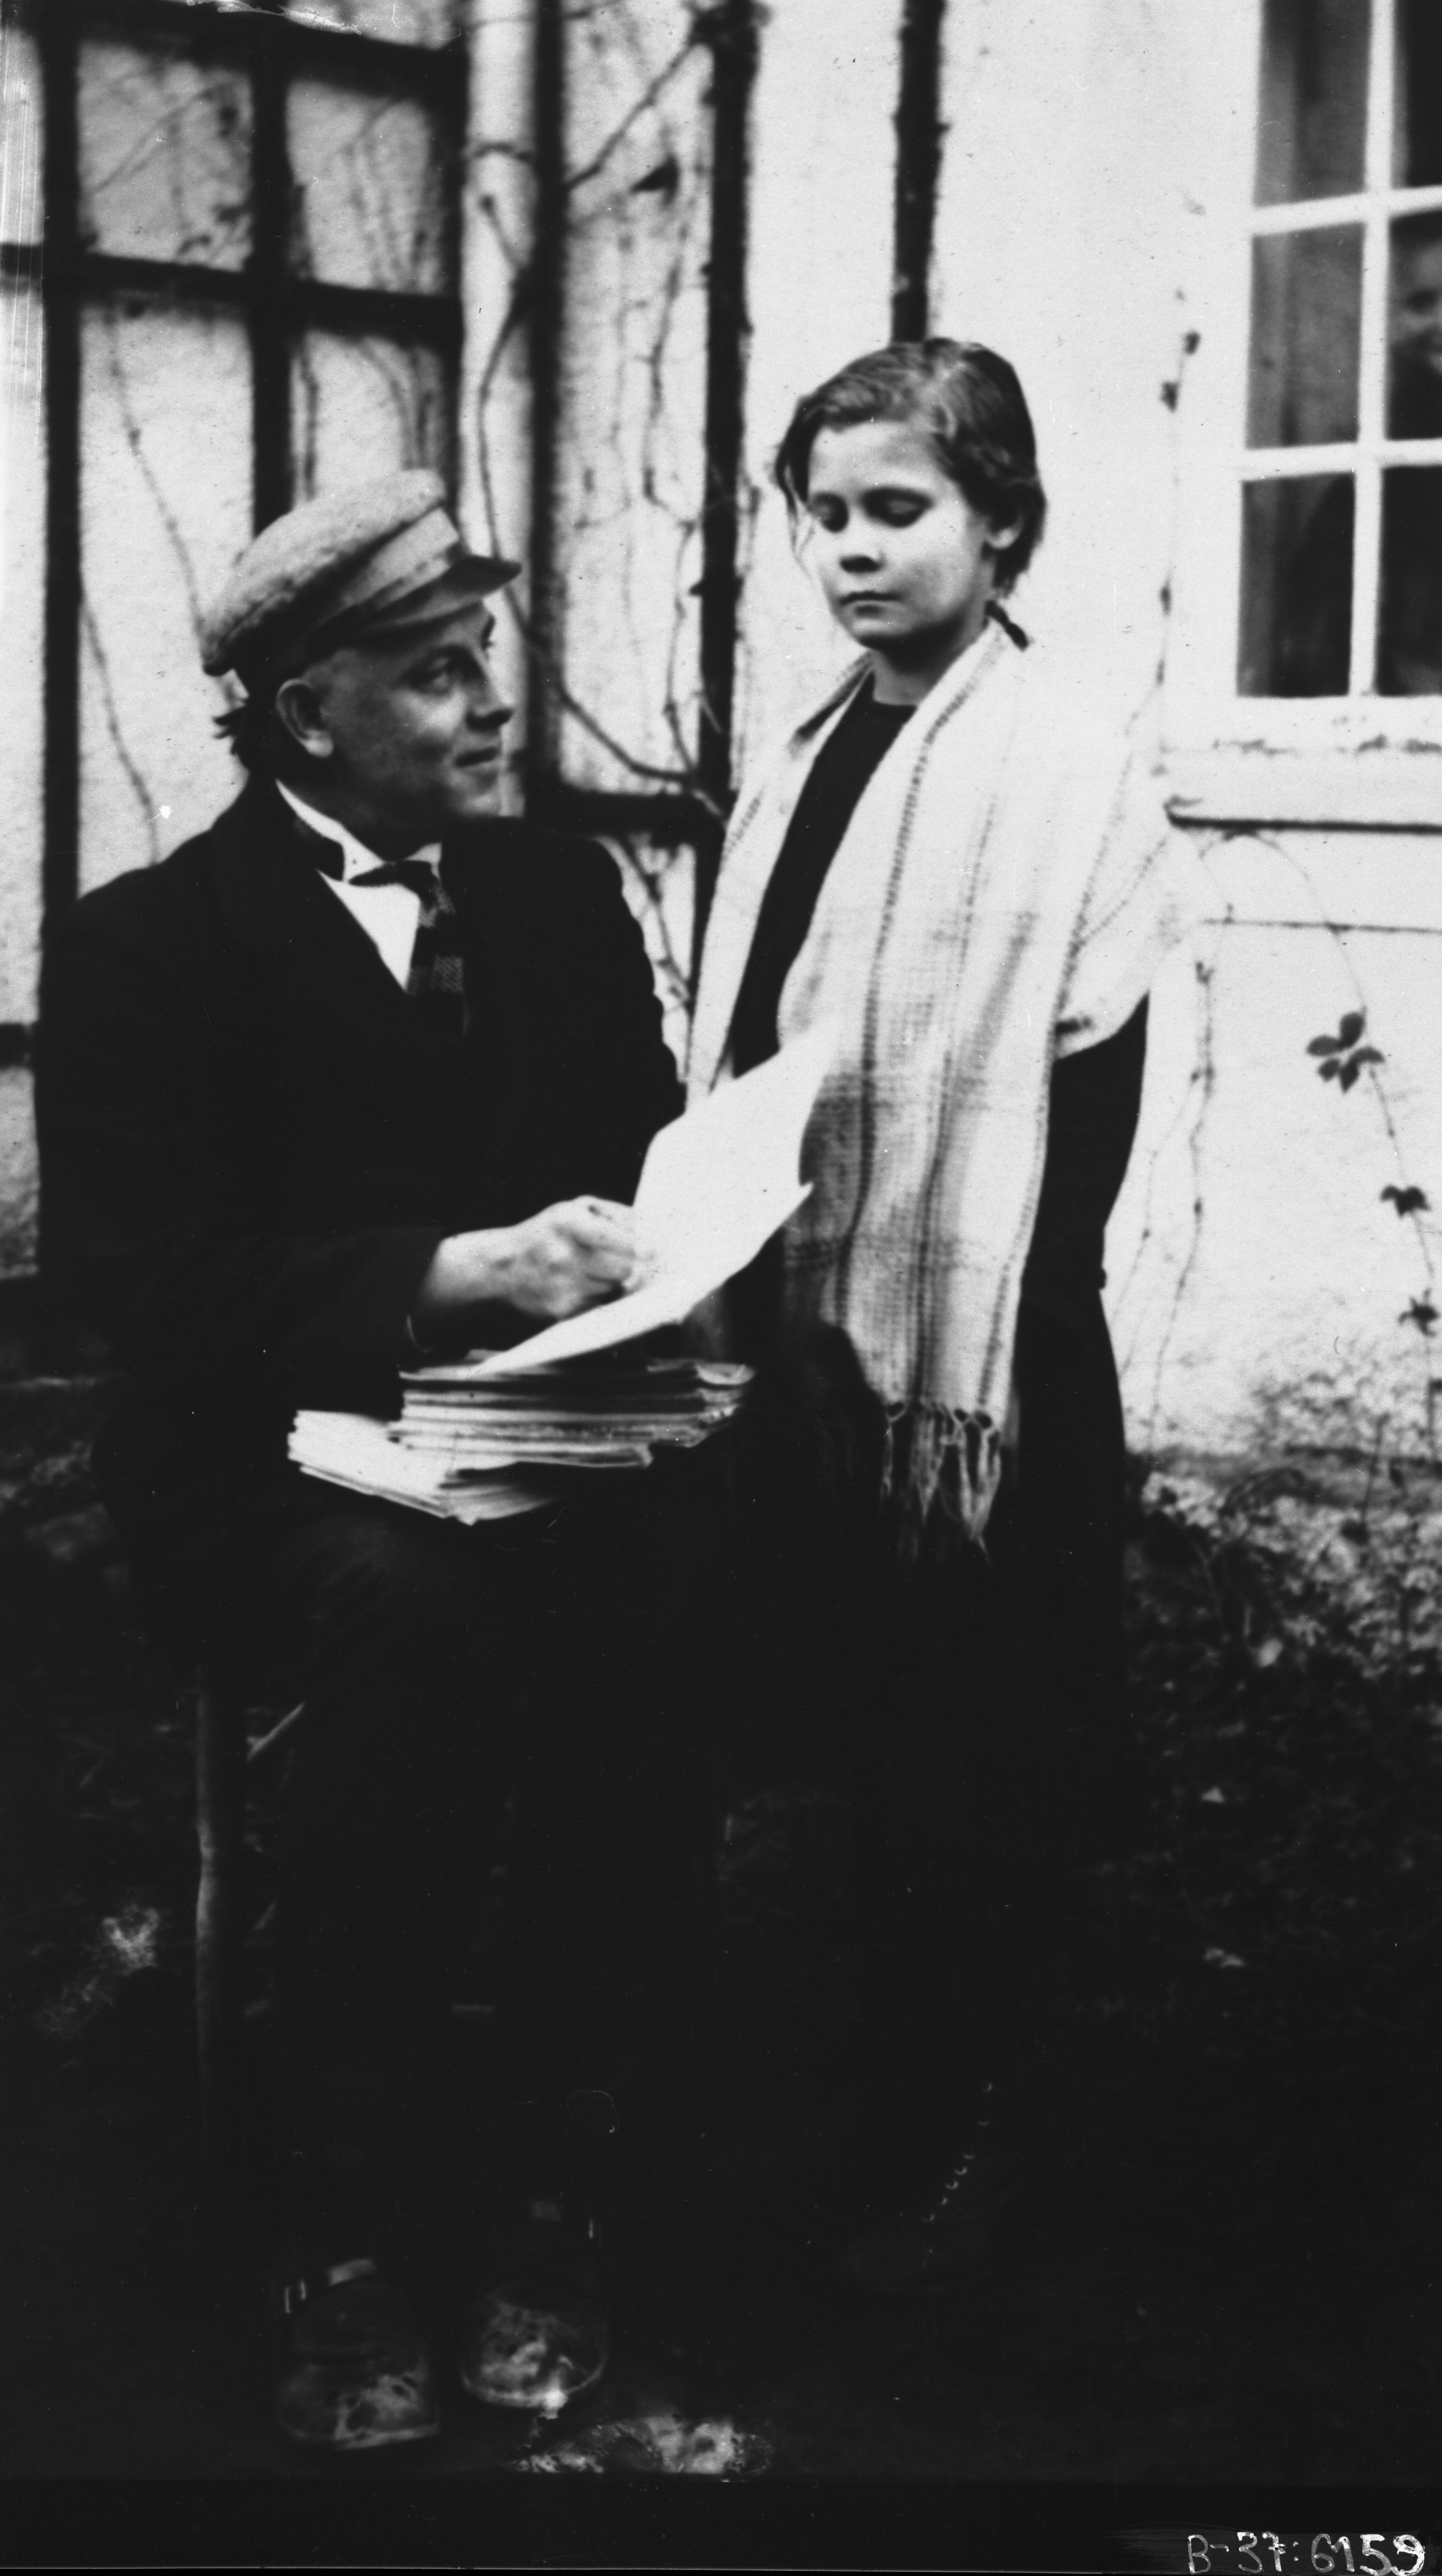 Hendrik Adamson with his student